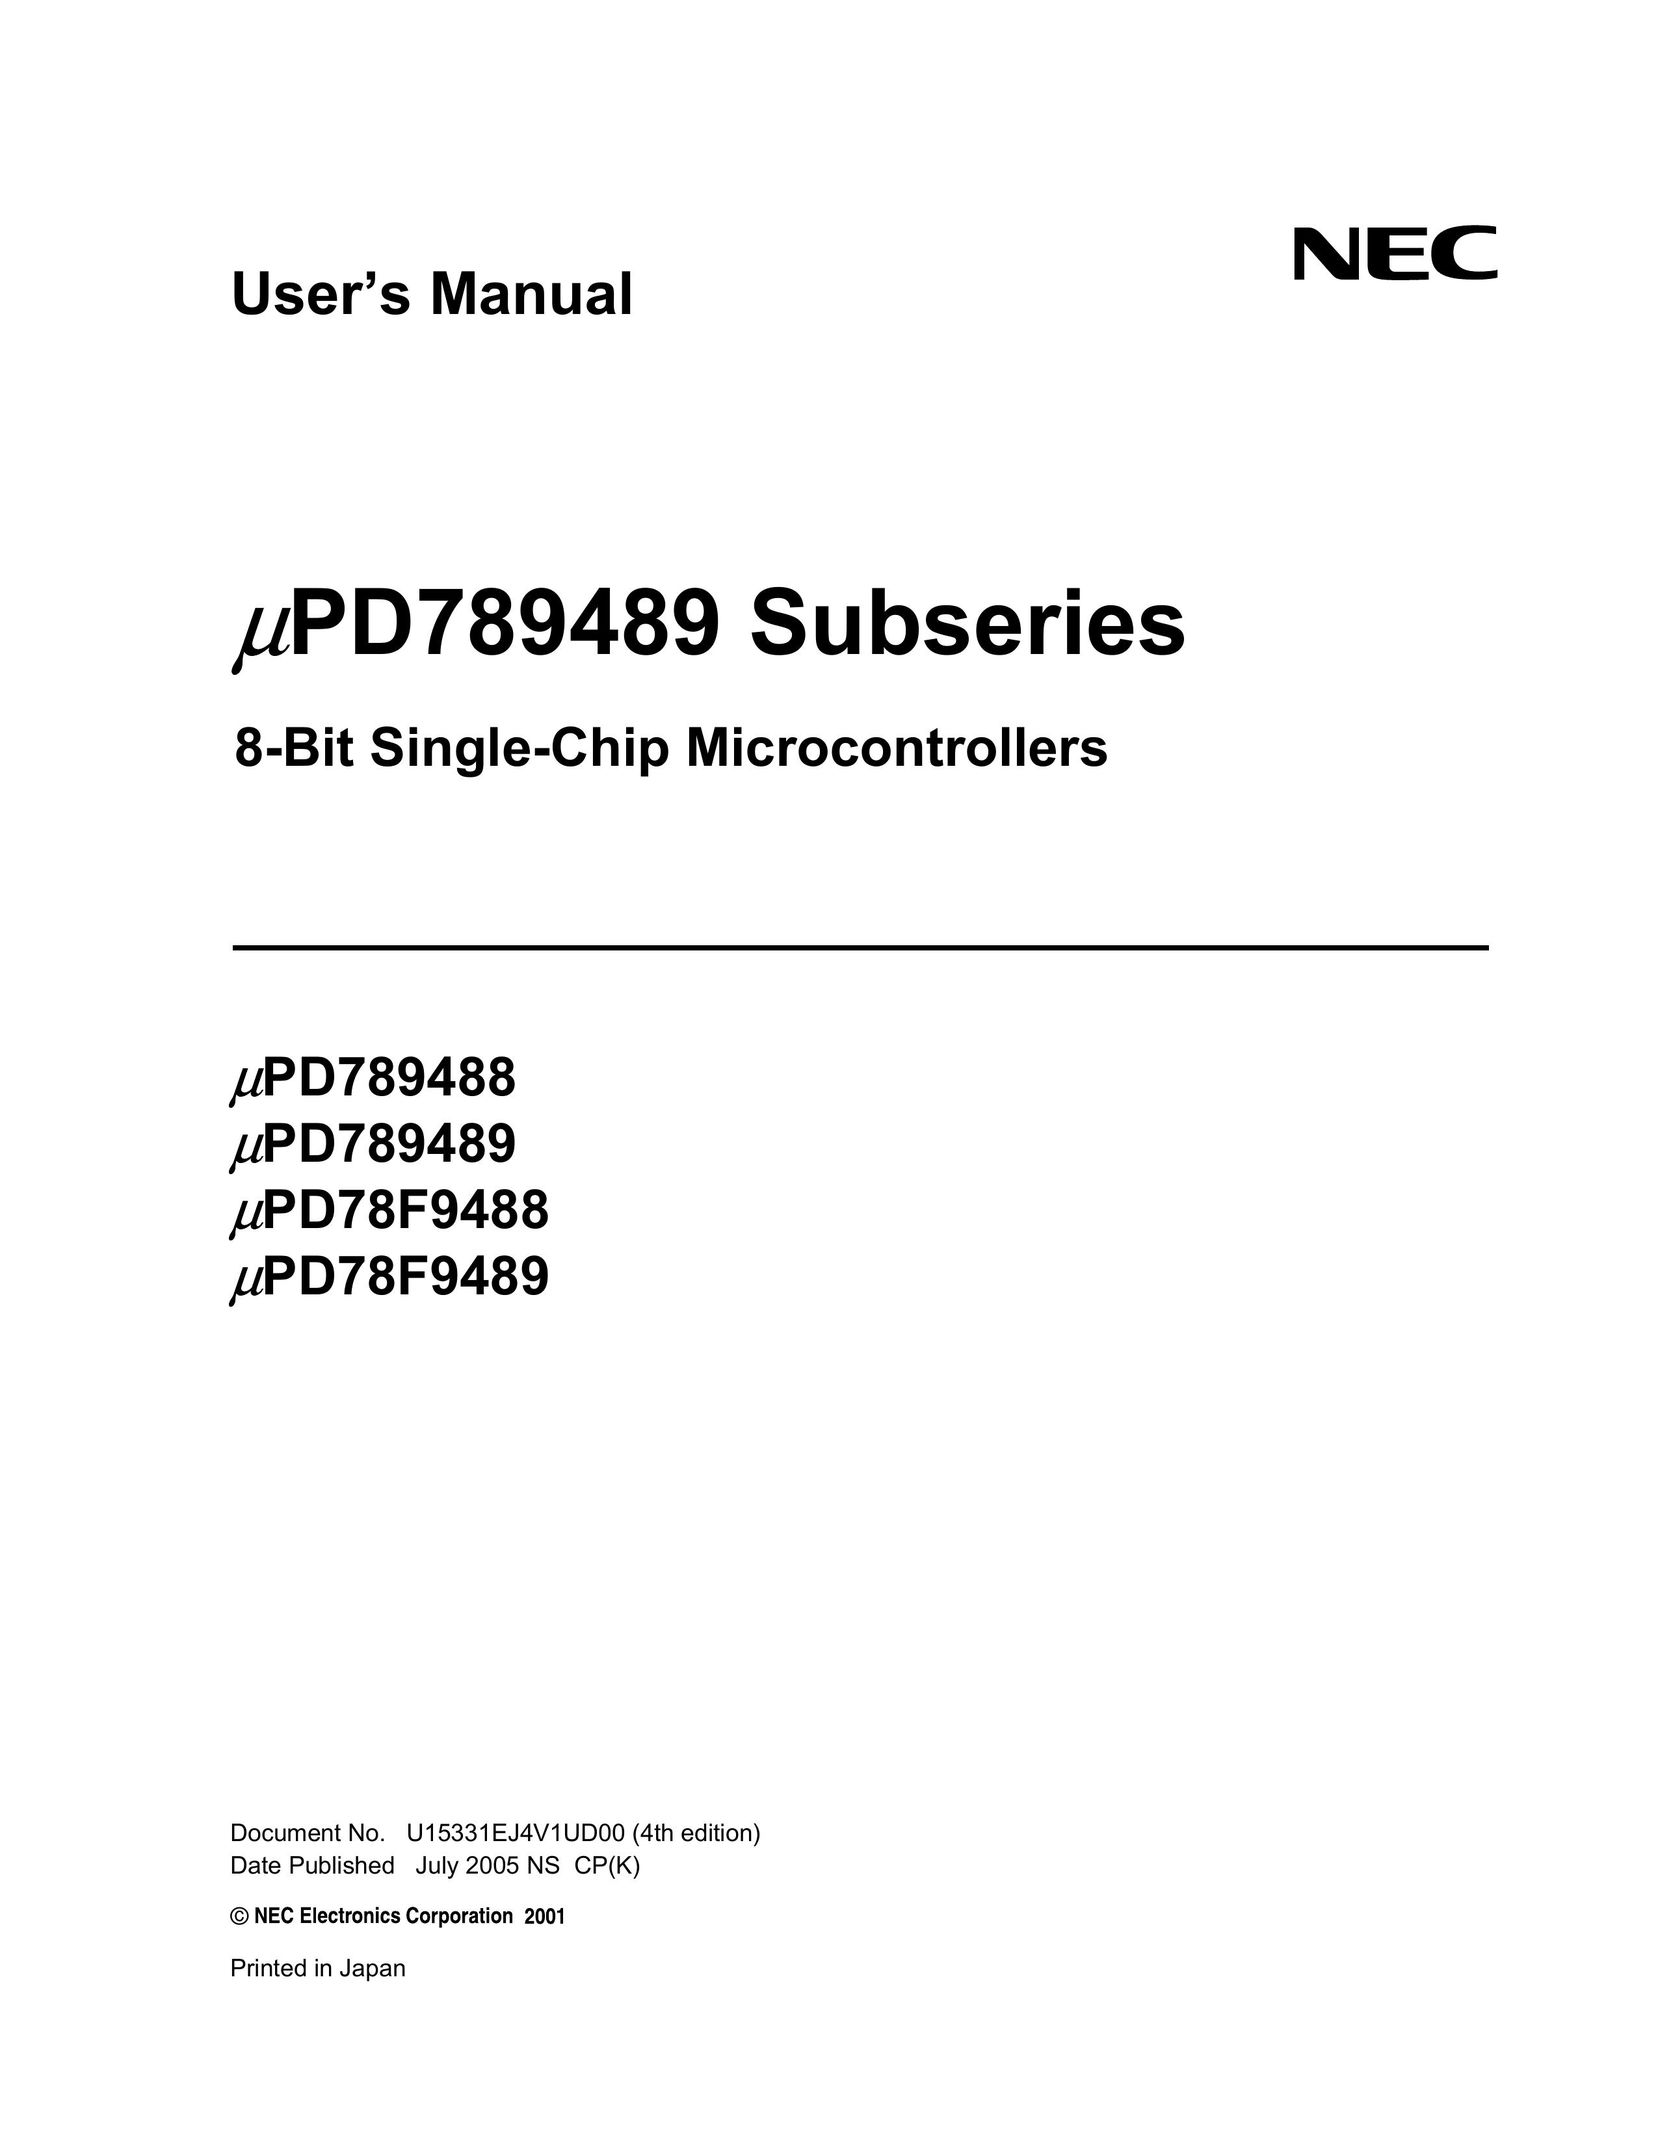 NEC PD789489 Computer Hardware User Manual